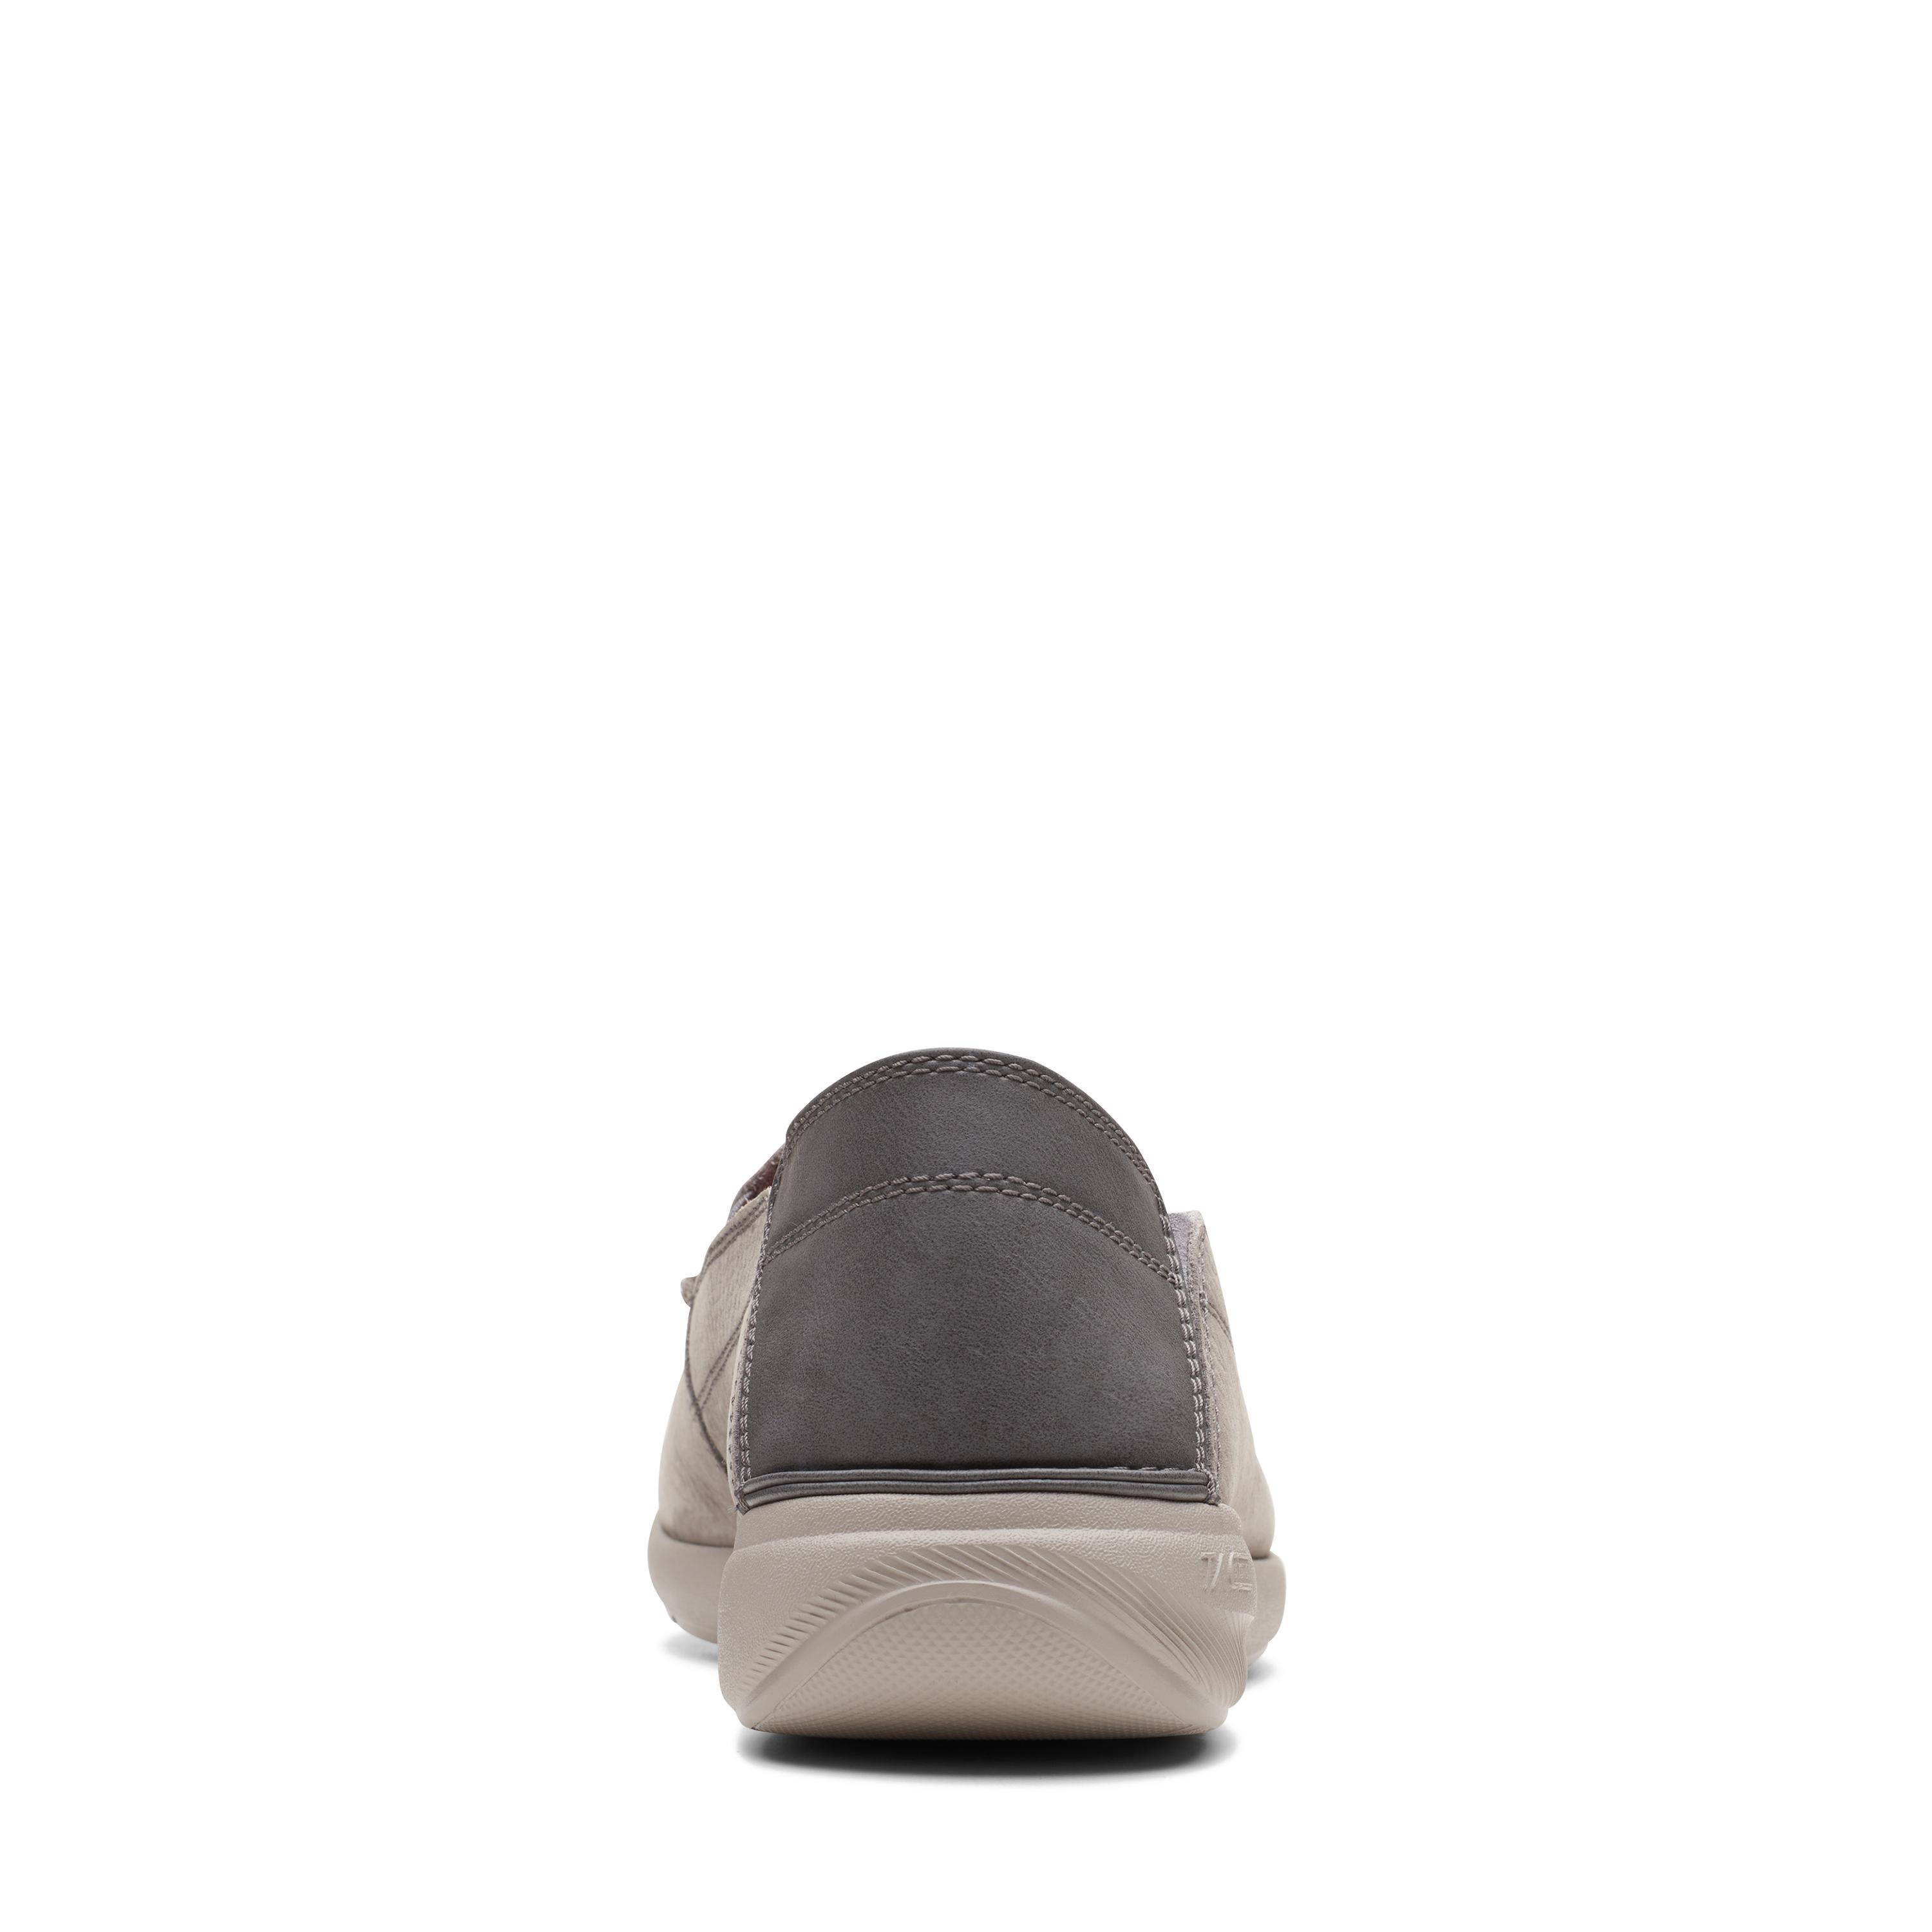 Мужские мокасины Clarks (Gorwin Step 26164693), серые, цвет серый, размер 41 - фото 6